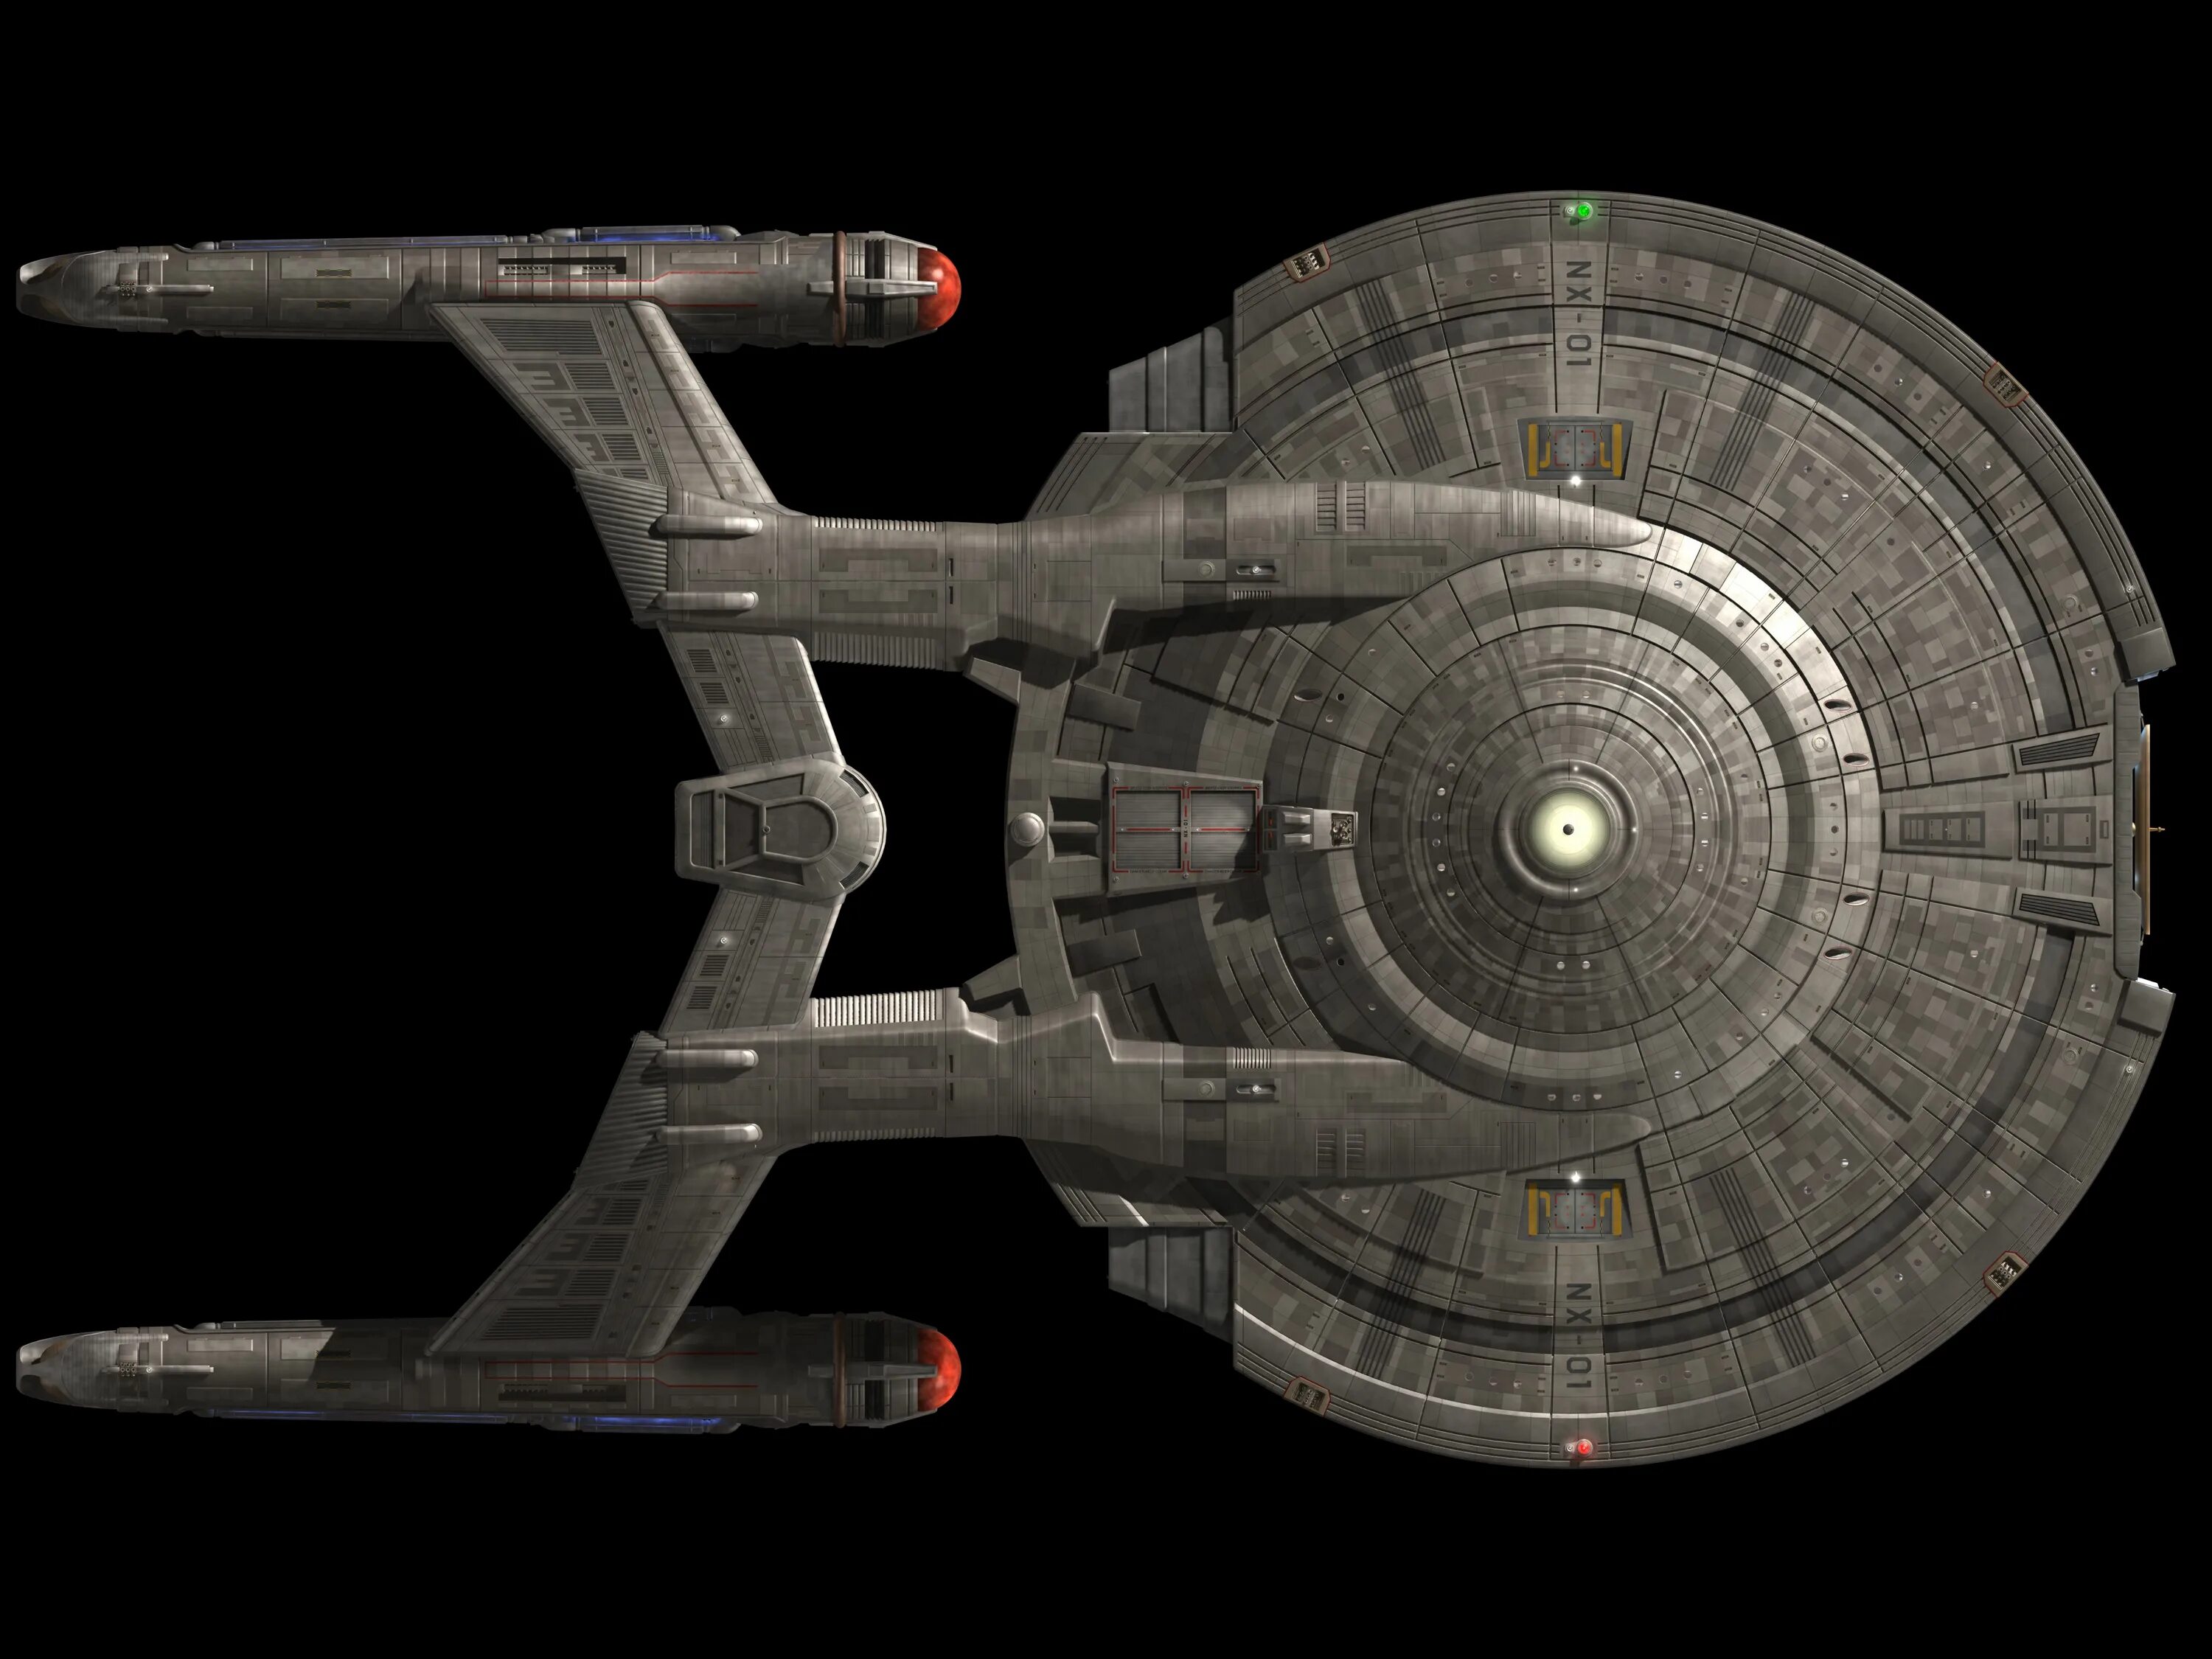 Star Trek Enterprise NX-01. Star Trek Enterprise NX-01 Wallpaper. USS Enterprise космический корабль. NX-01.